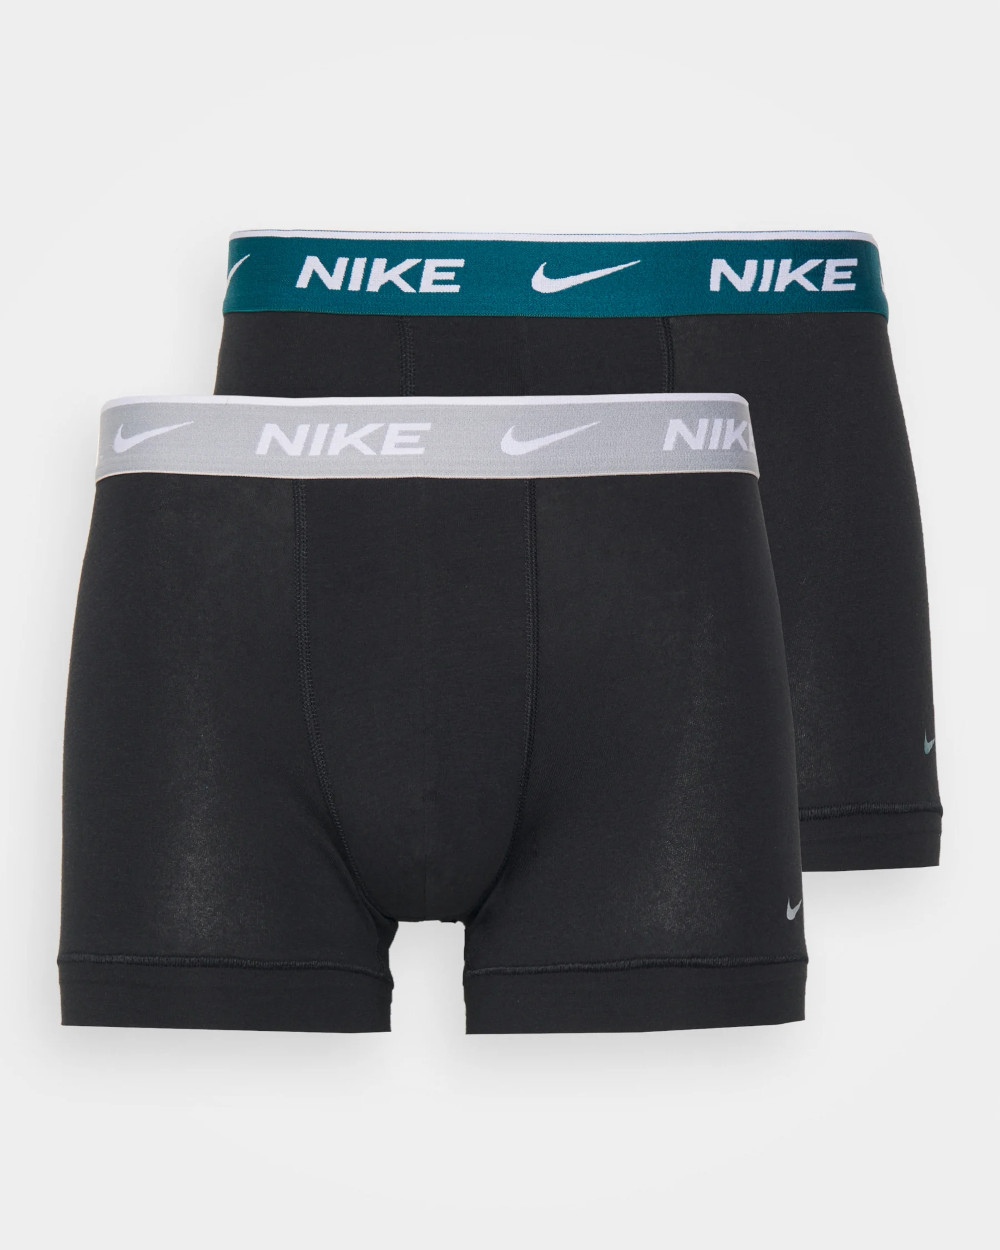  Intimo boxer mutande UOMO Nike Underwear BRIEF 2 PACK Culotte Verde grigio